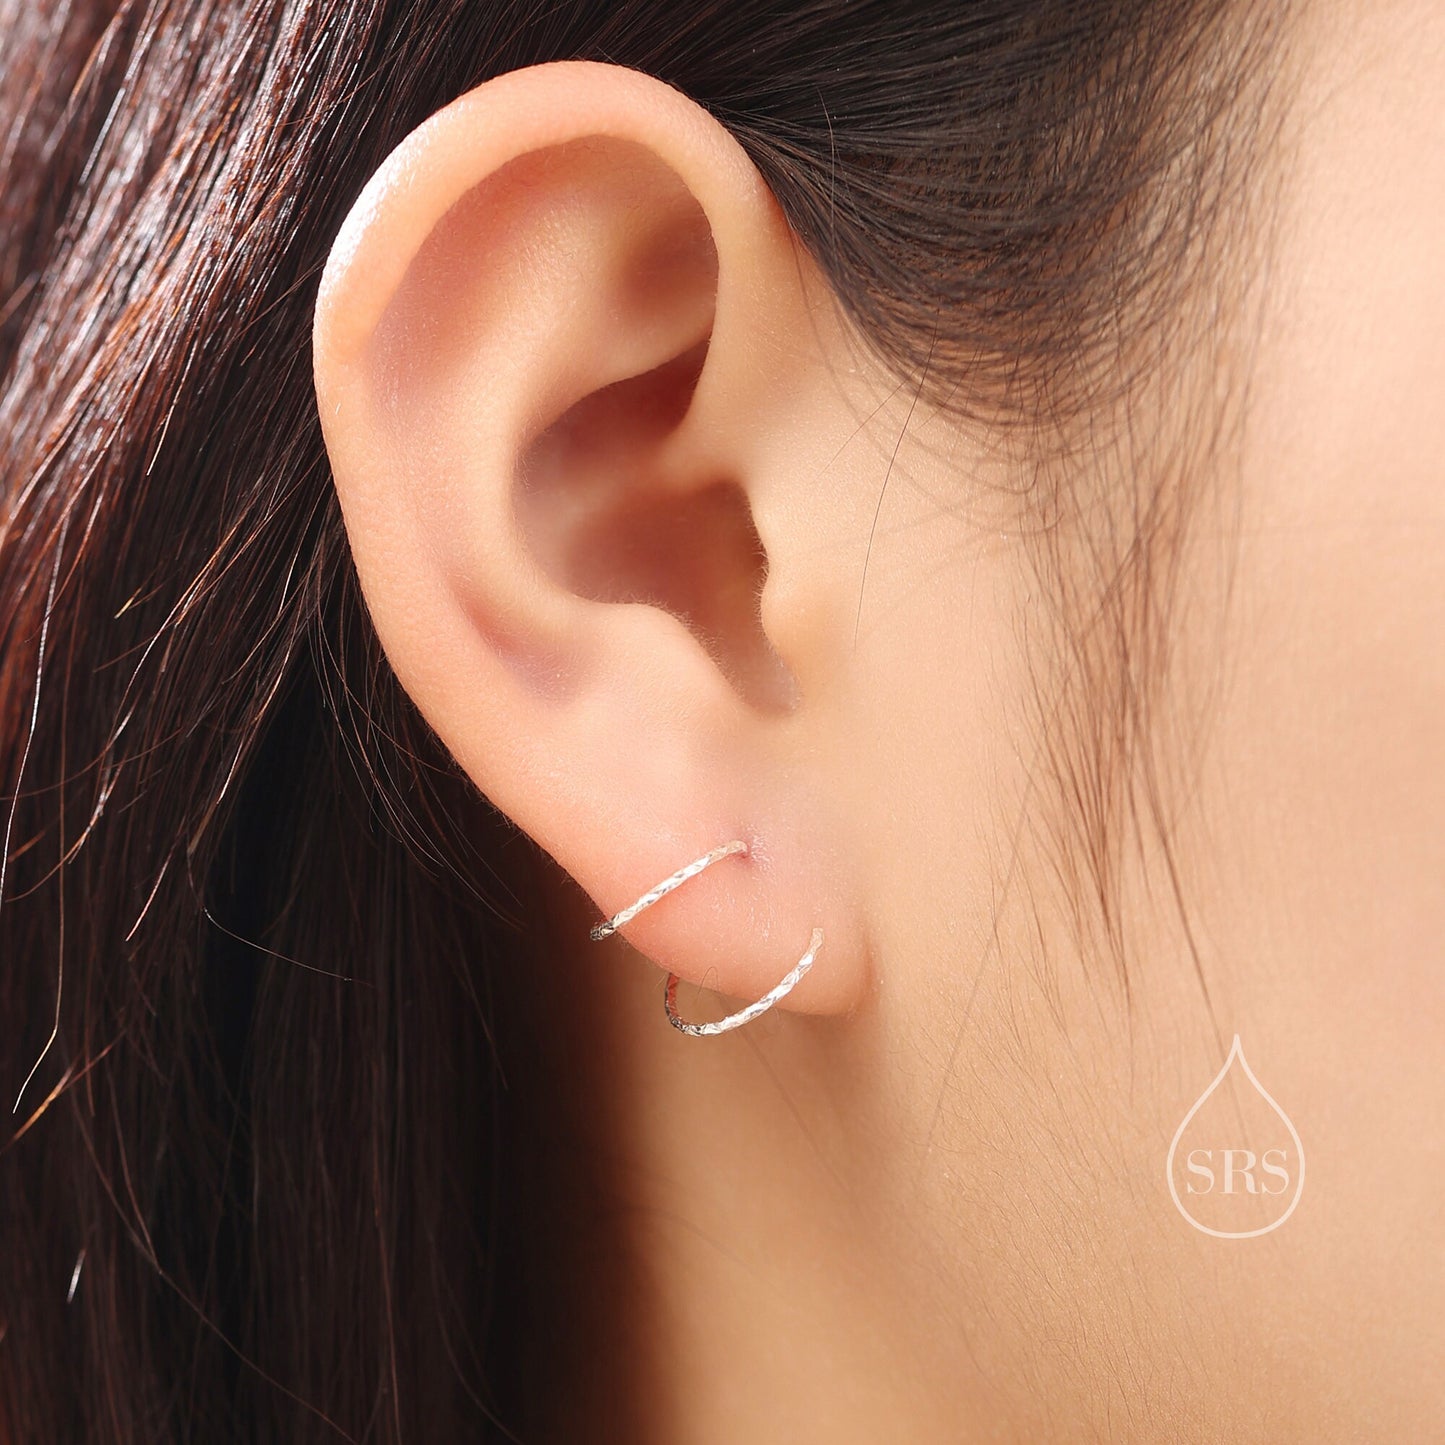 Diamond Cut Single Piercing Spiral Hoop Earrings In Sterling Silver, Silver, Gold or Rose Gold, 6mm, 7mm, 8mm Minimalist Spiral Earrings